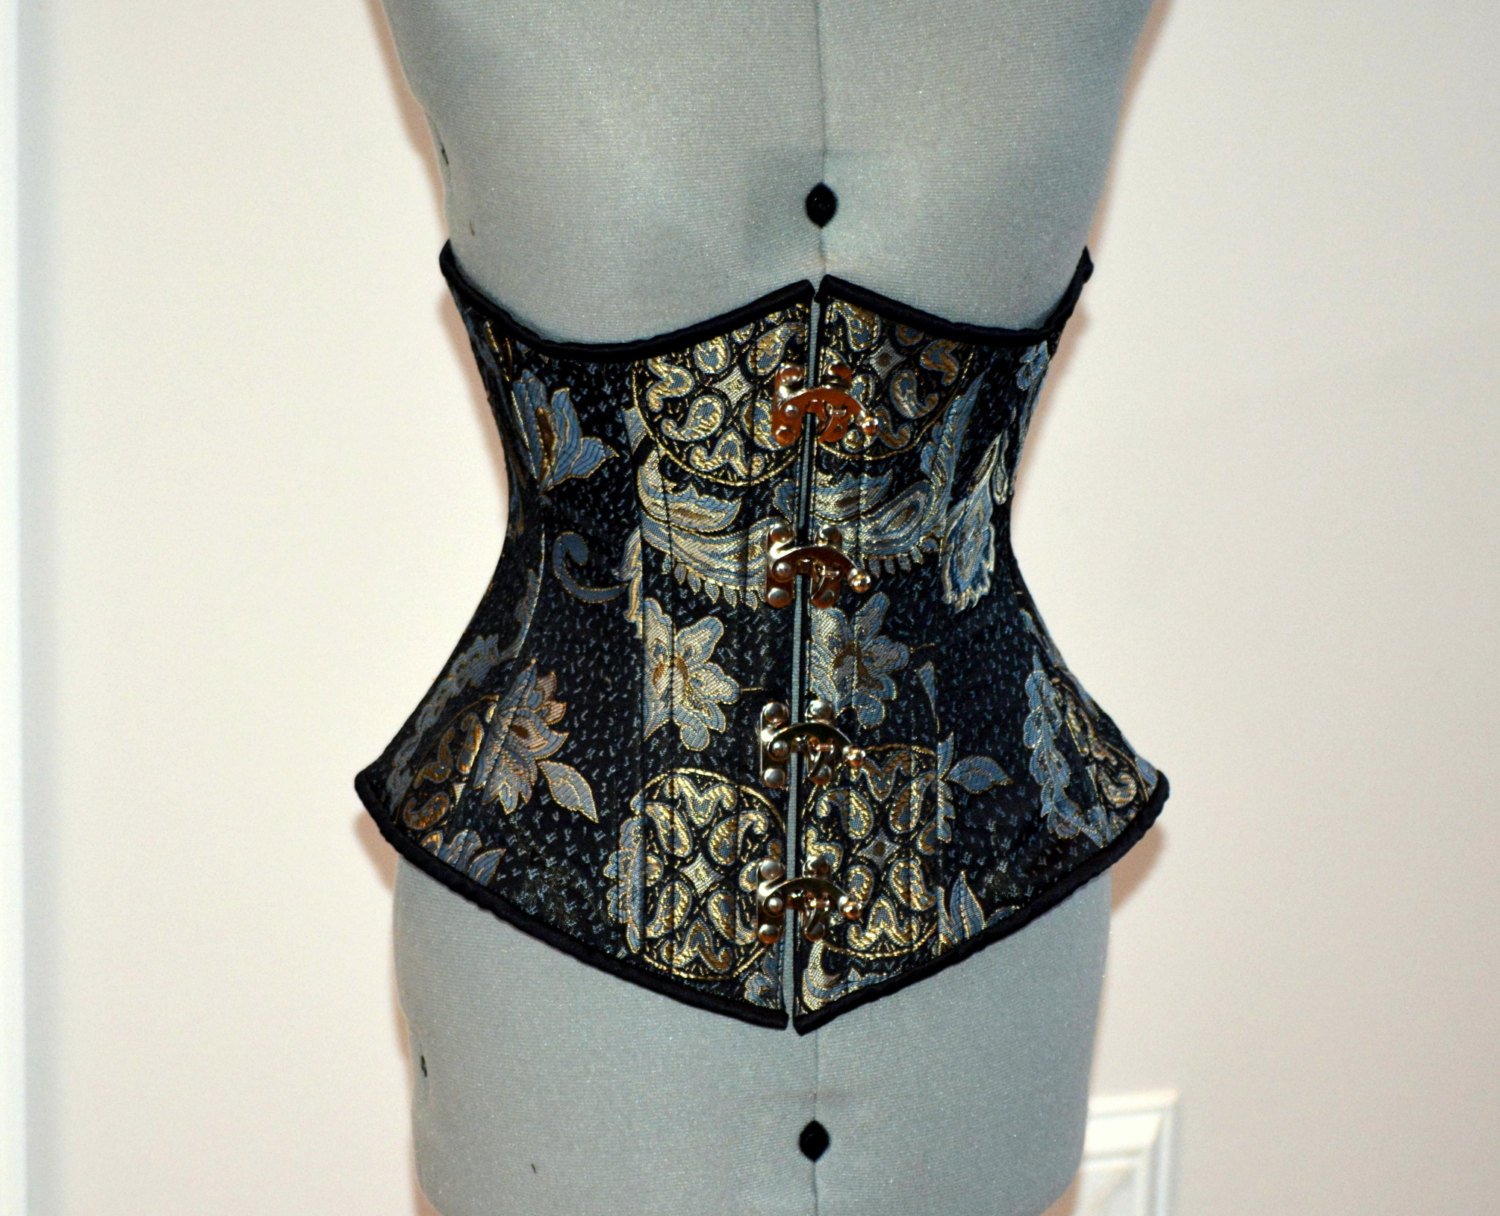 Steel boned underbust steampunk corset from brocade with golden patter ...